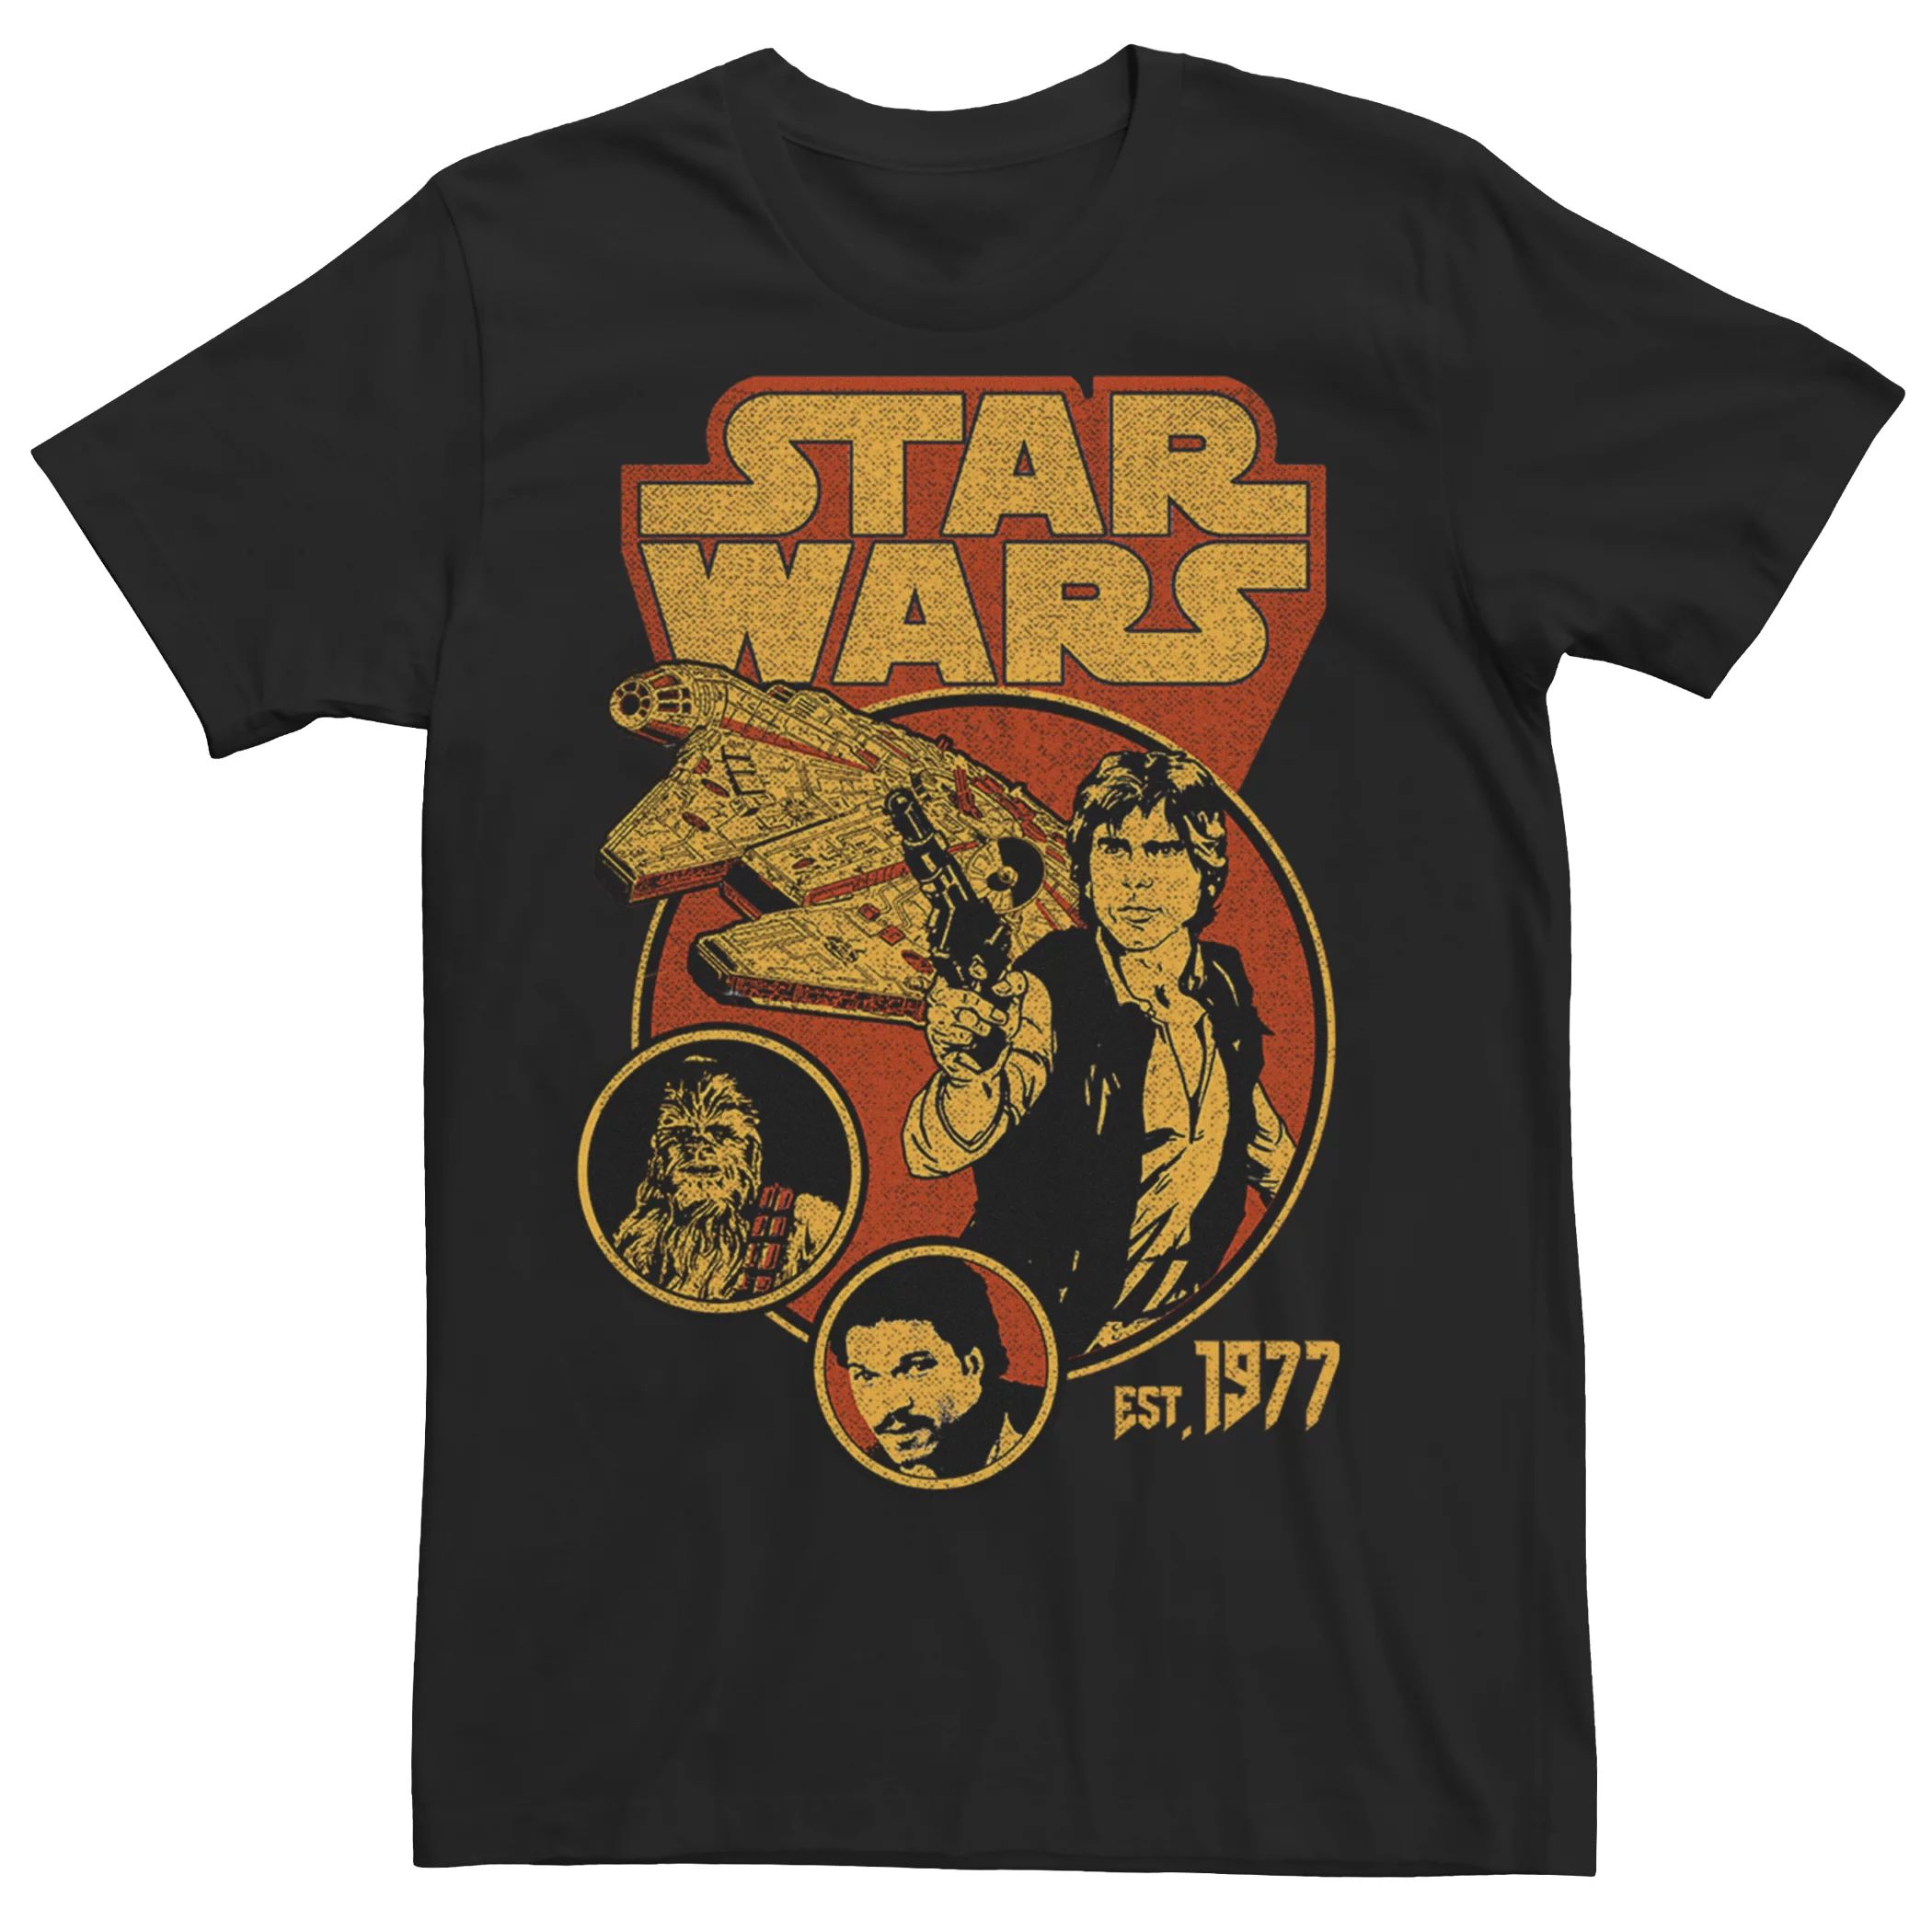 Мужская футболка с логотипом Star Wars Big Three